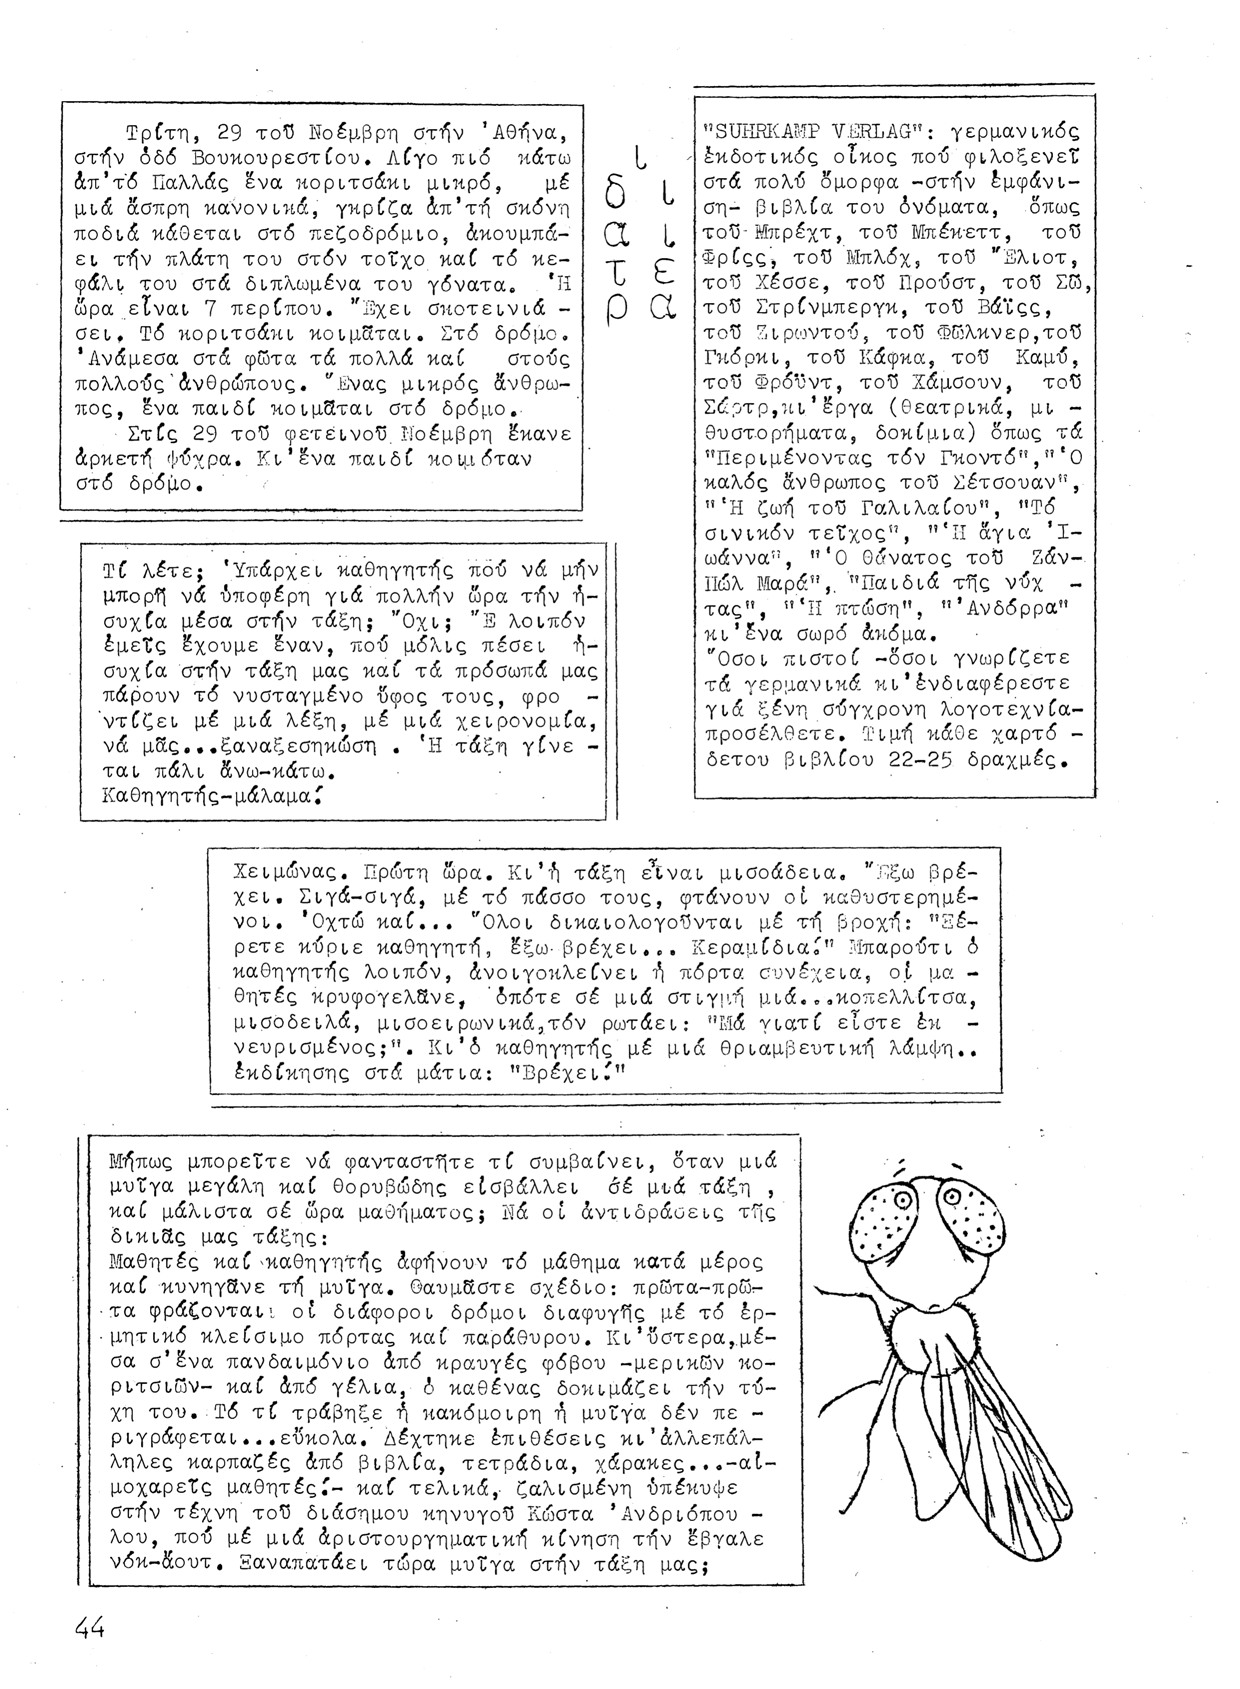 SELIDES 3 Page 42